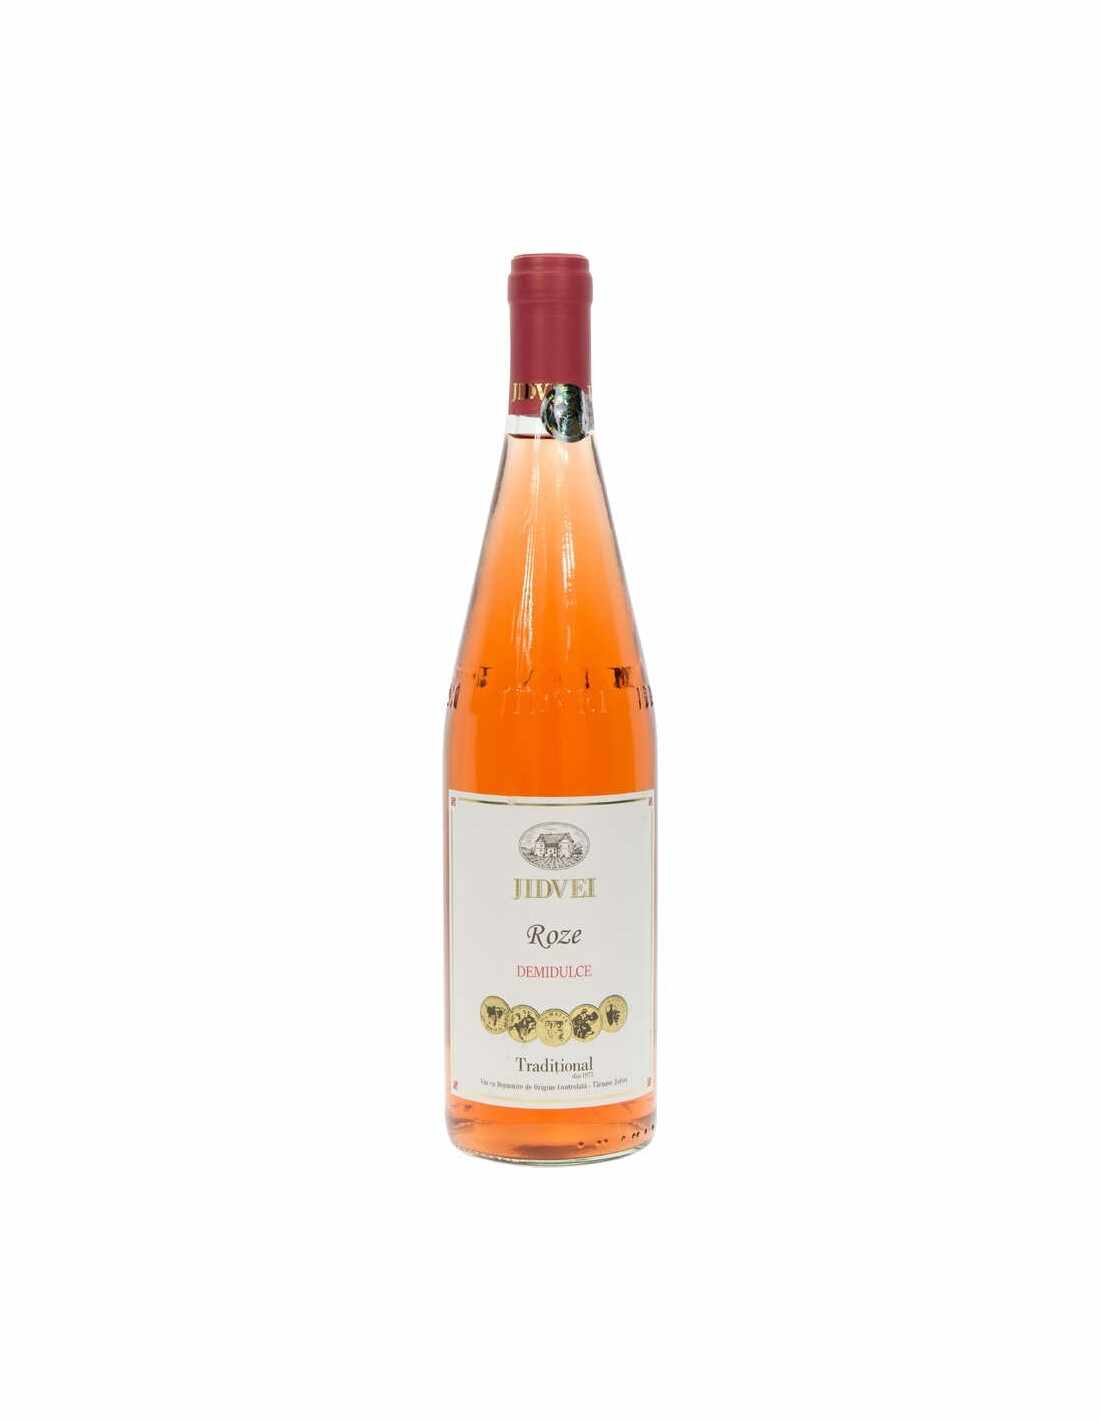 Vin roze demidulce, Cupaj, Jidvei Traditional, 12.5% alc., 0.75L, Romania